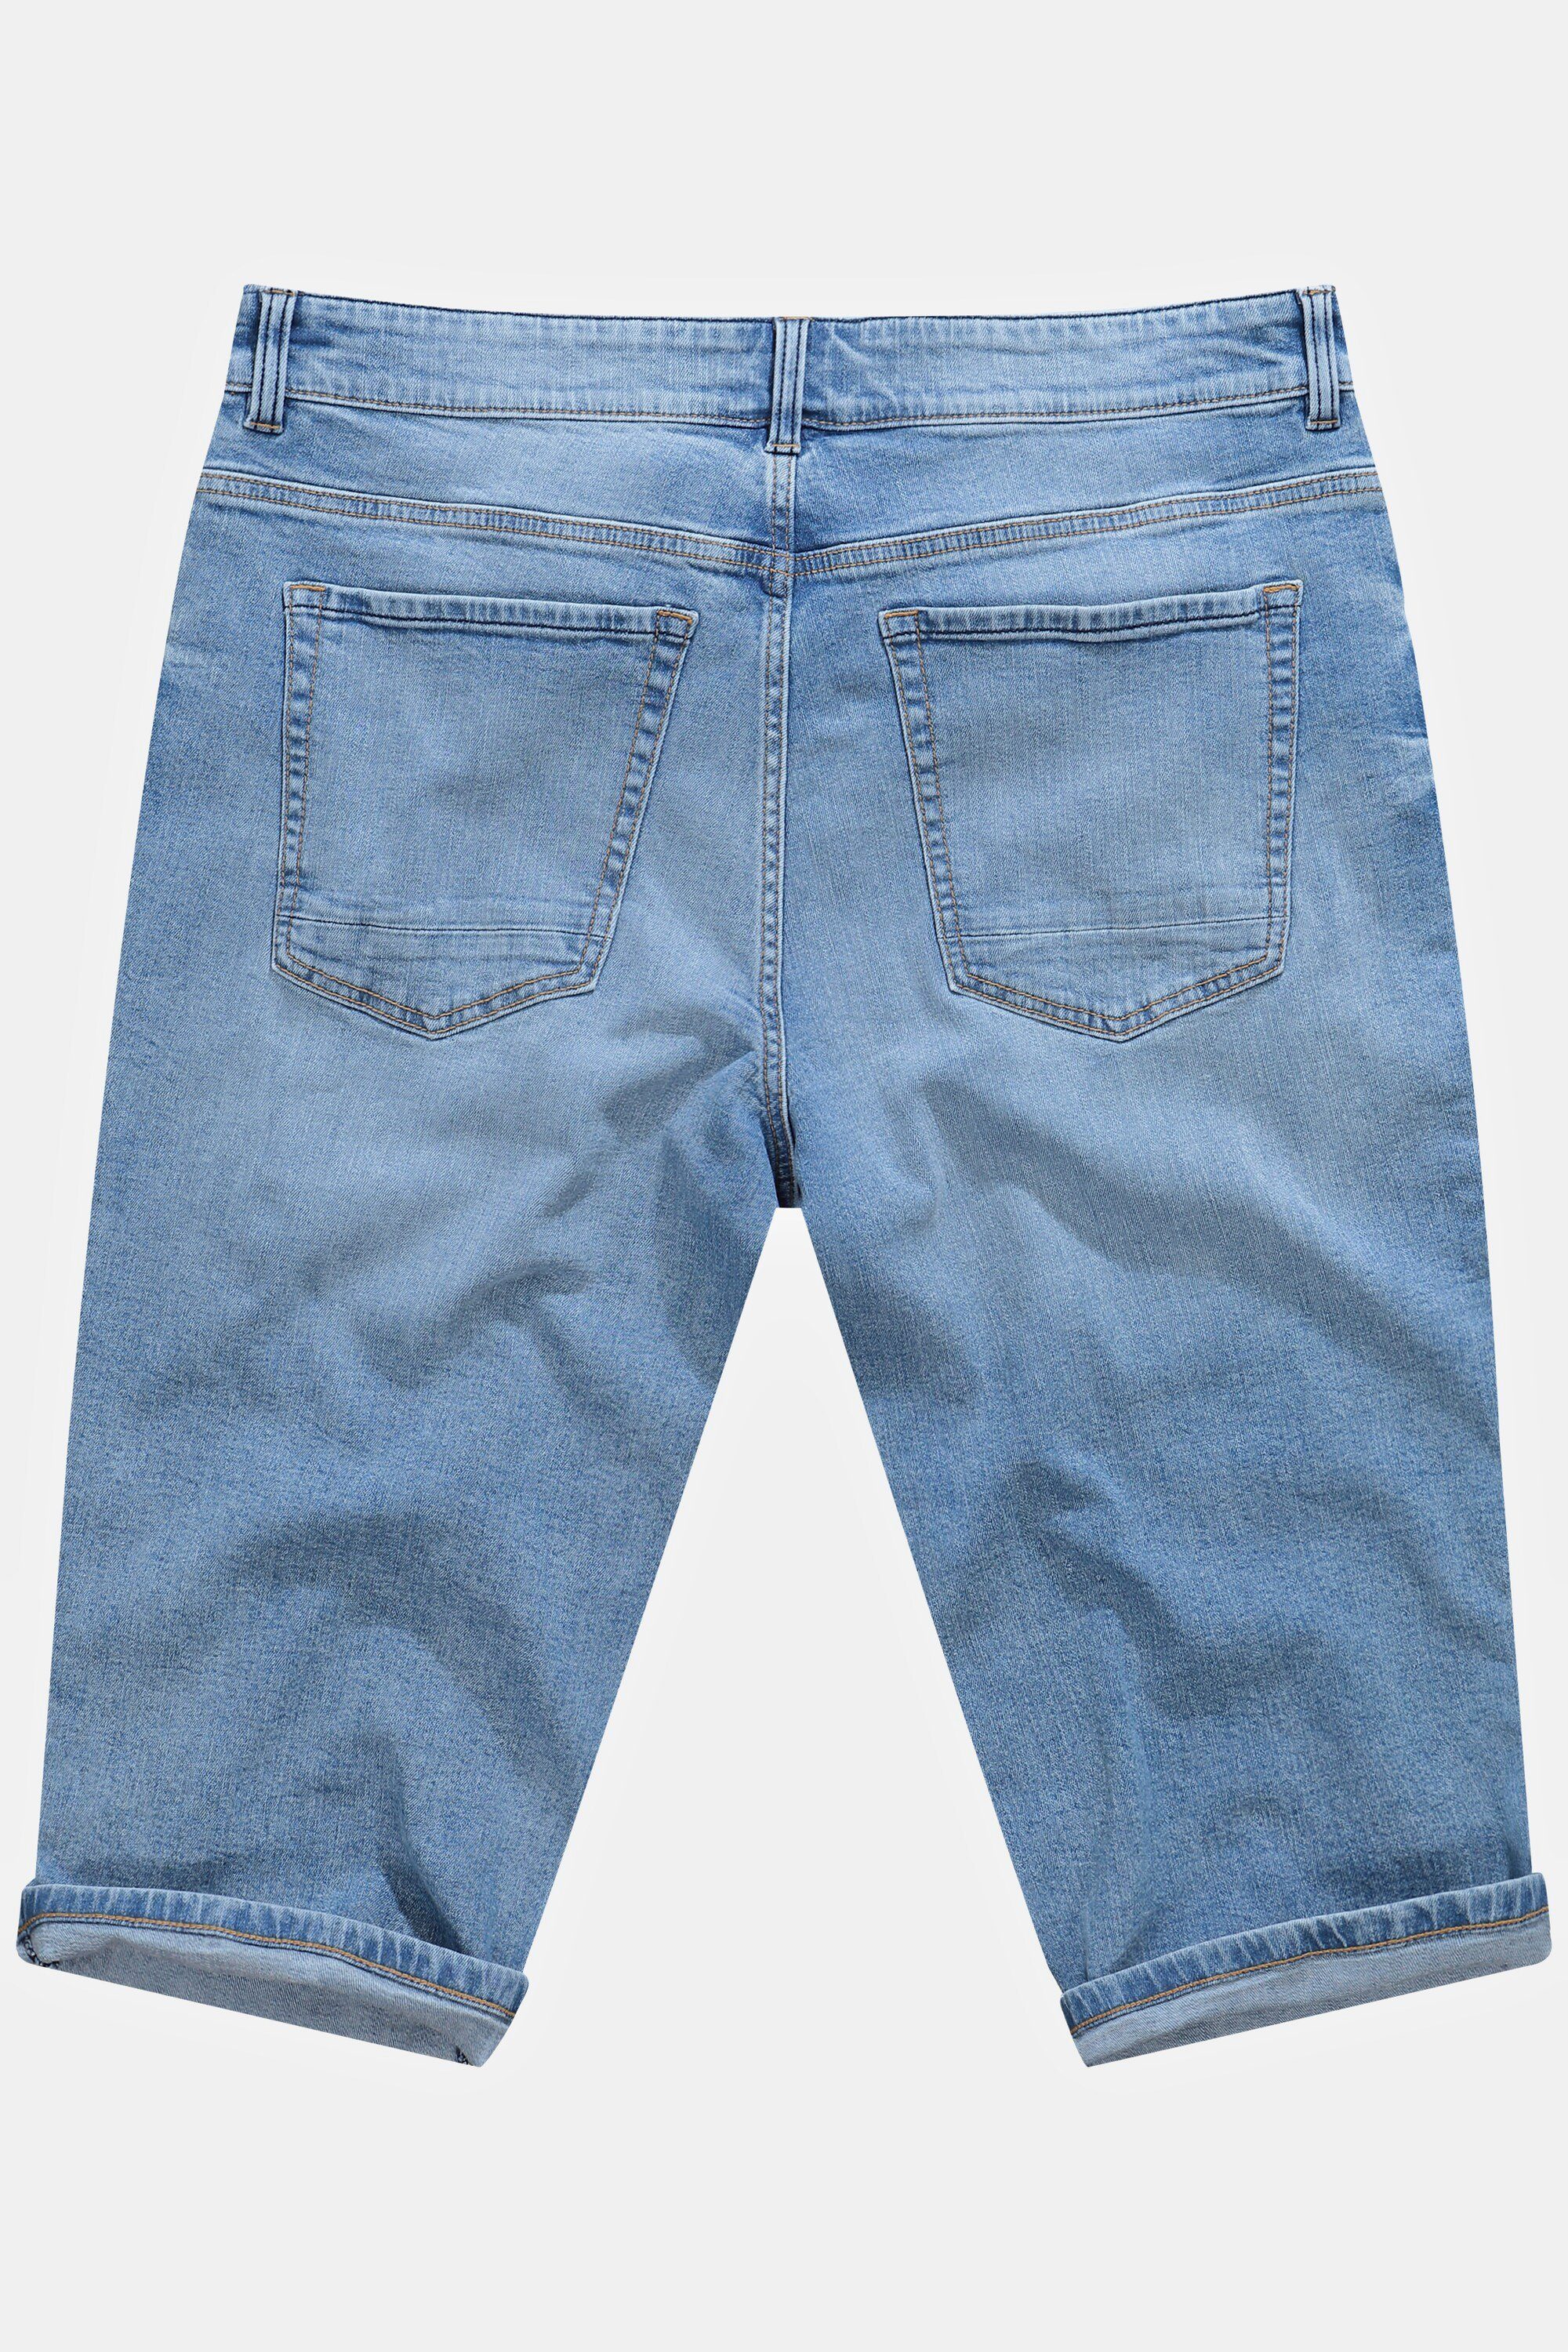 JP1880 Powerstretch 3/4-Jeans Jeansbermudas light blue 5-Pocket